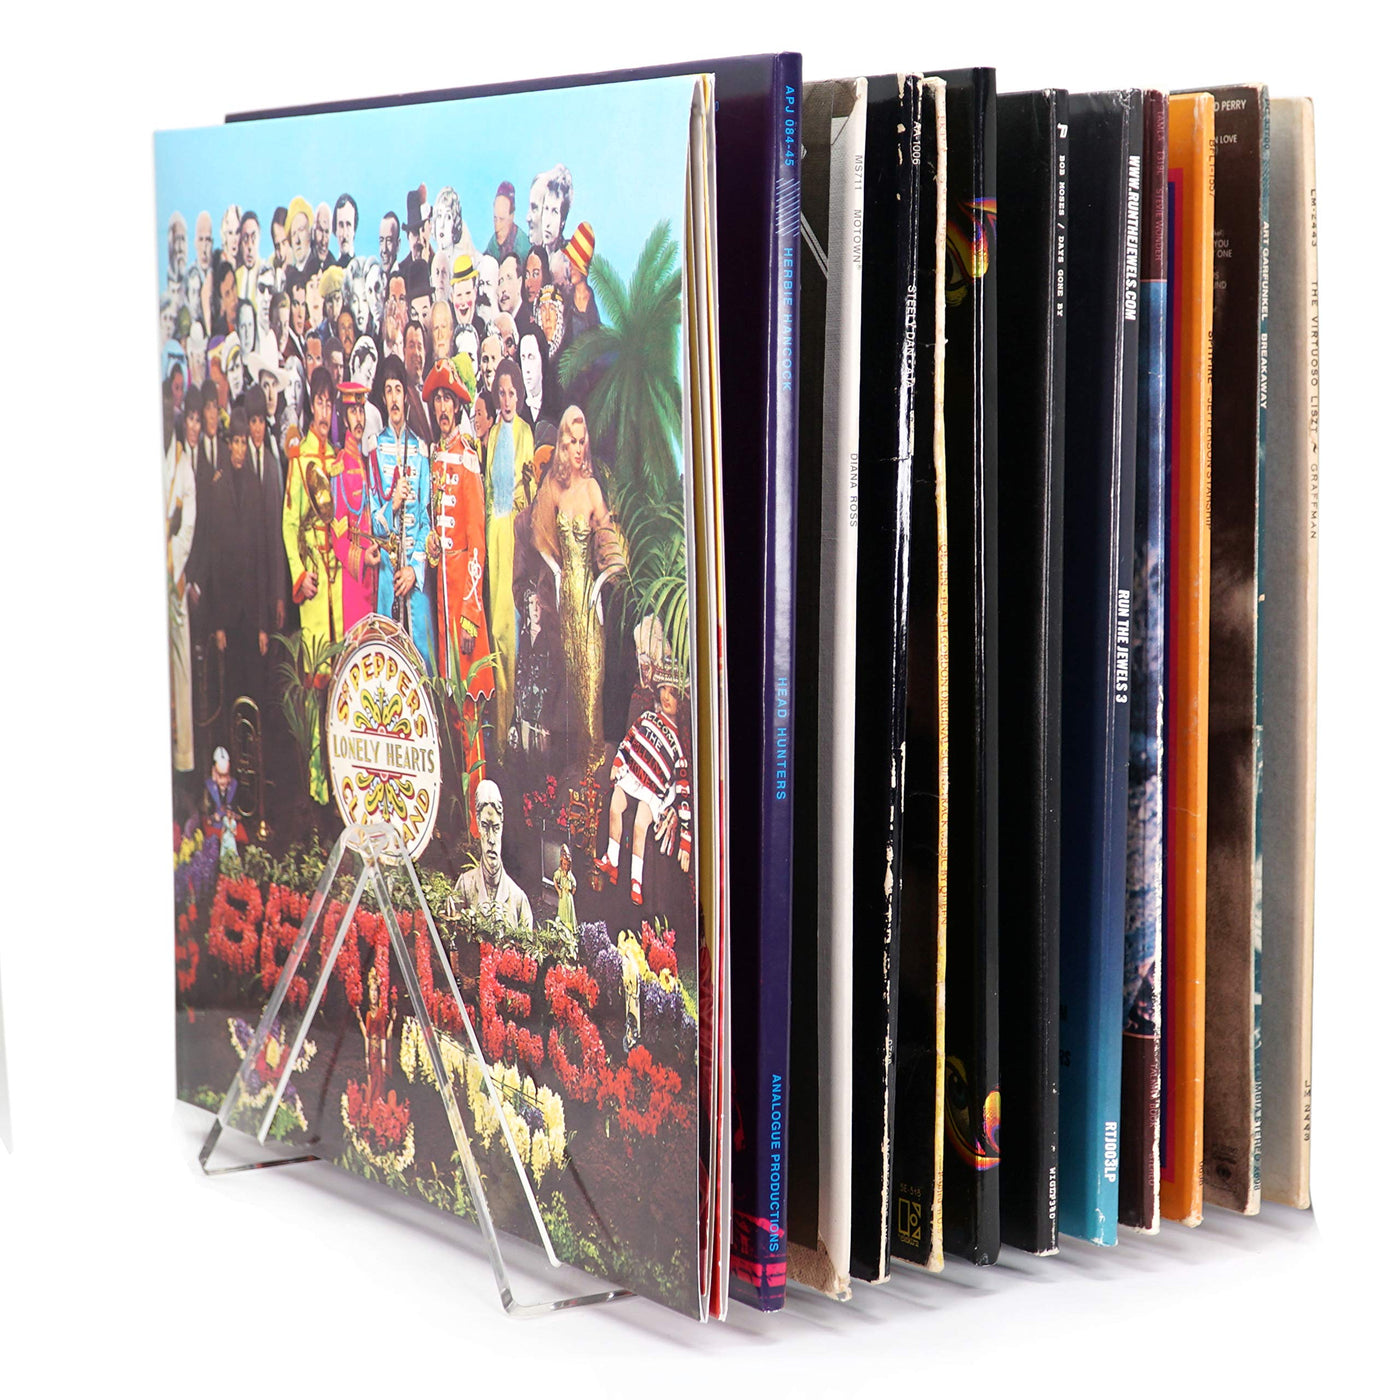 Hudson Hi-Fi Vinyl Record Storage Holder - Vyramid Organizer